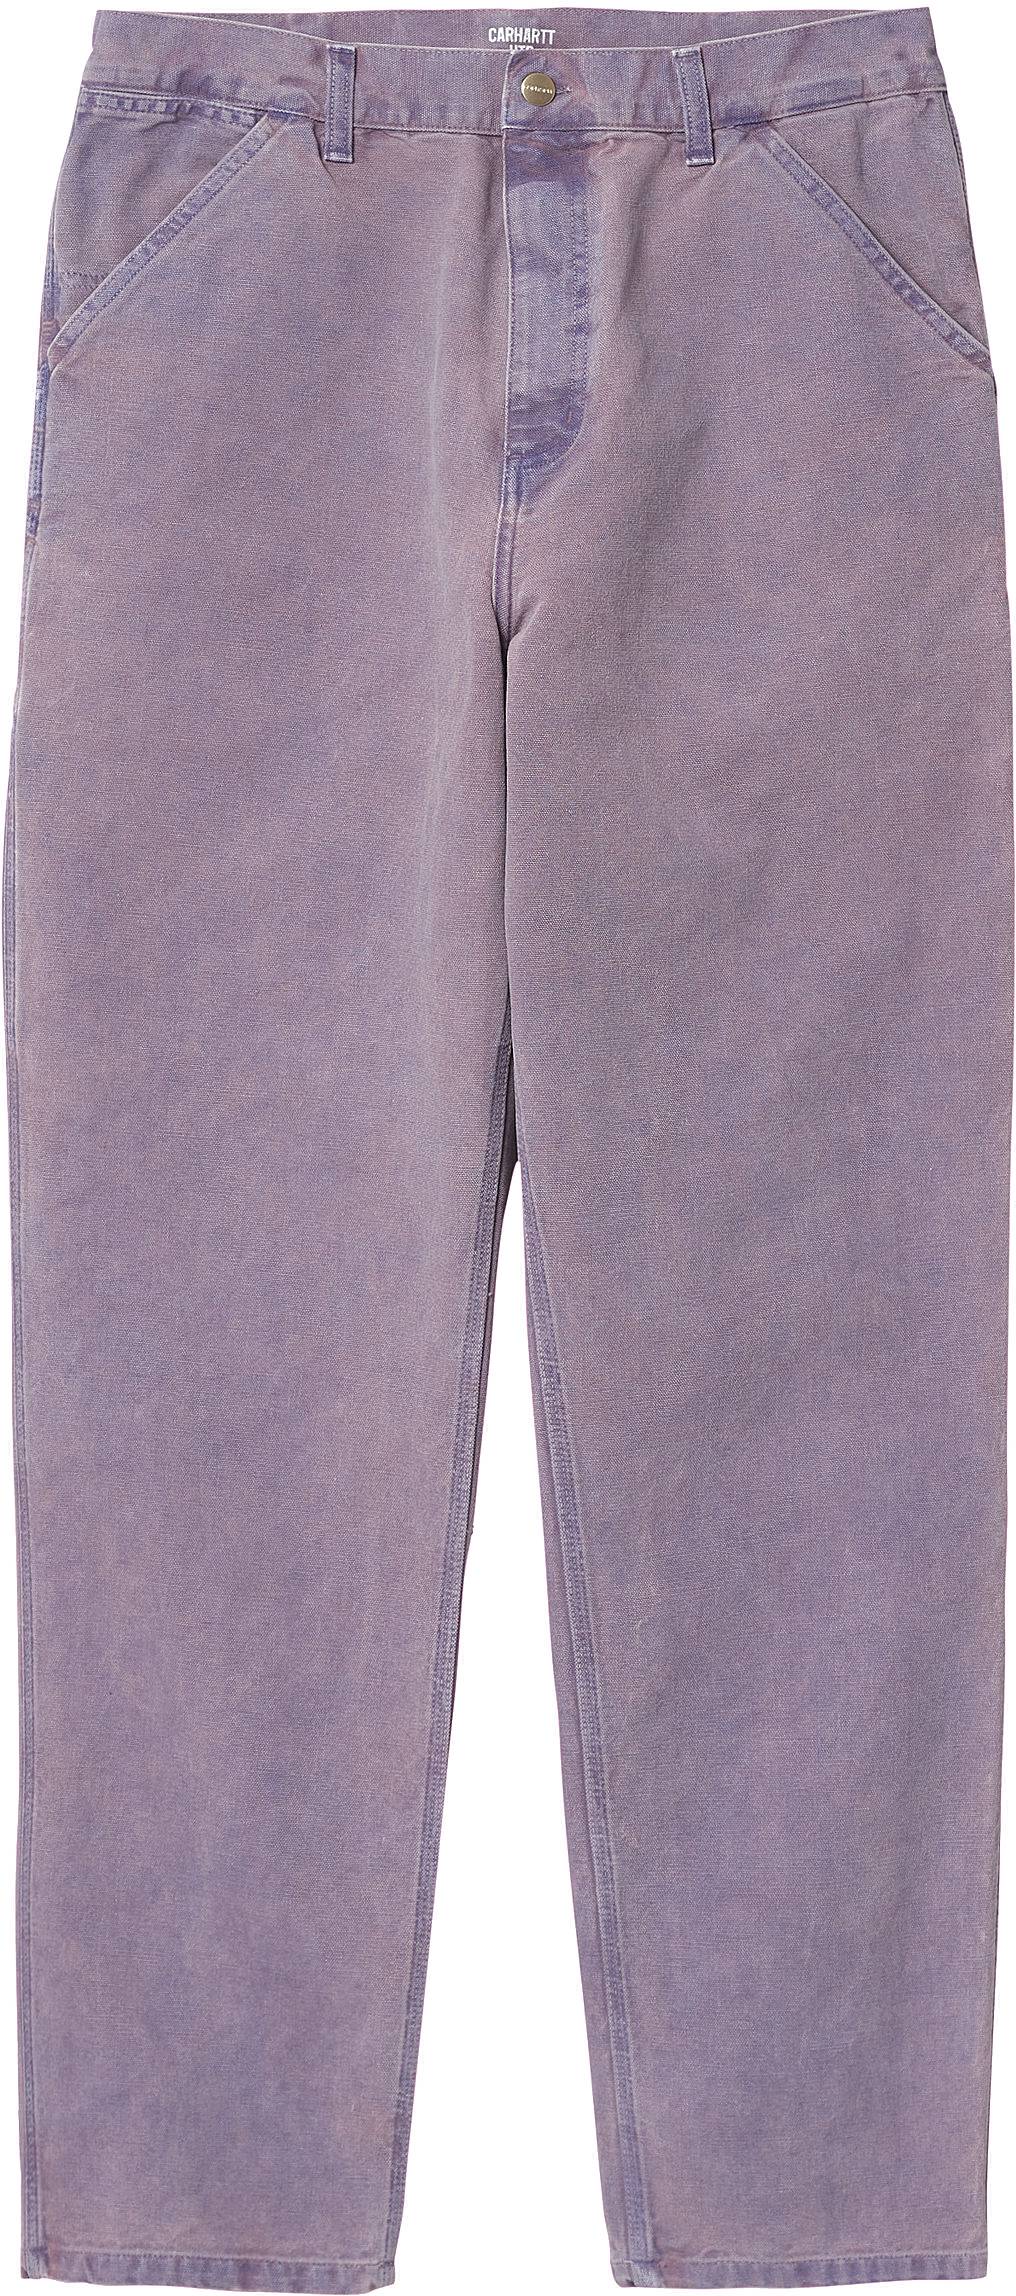  Carhartt Wip Pantaloni Jeans Single Knee Pant Razzmic Viola Uomo - 2